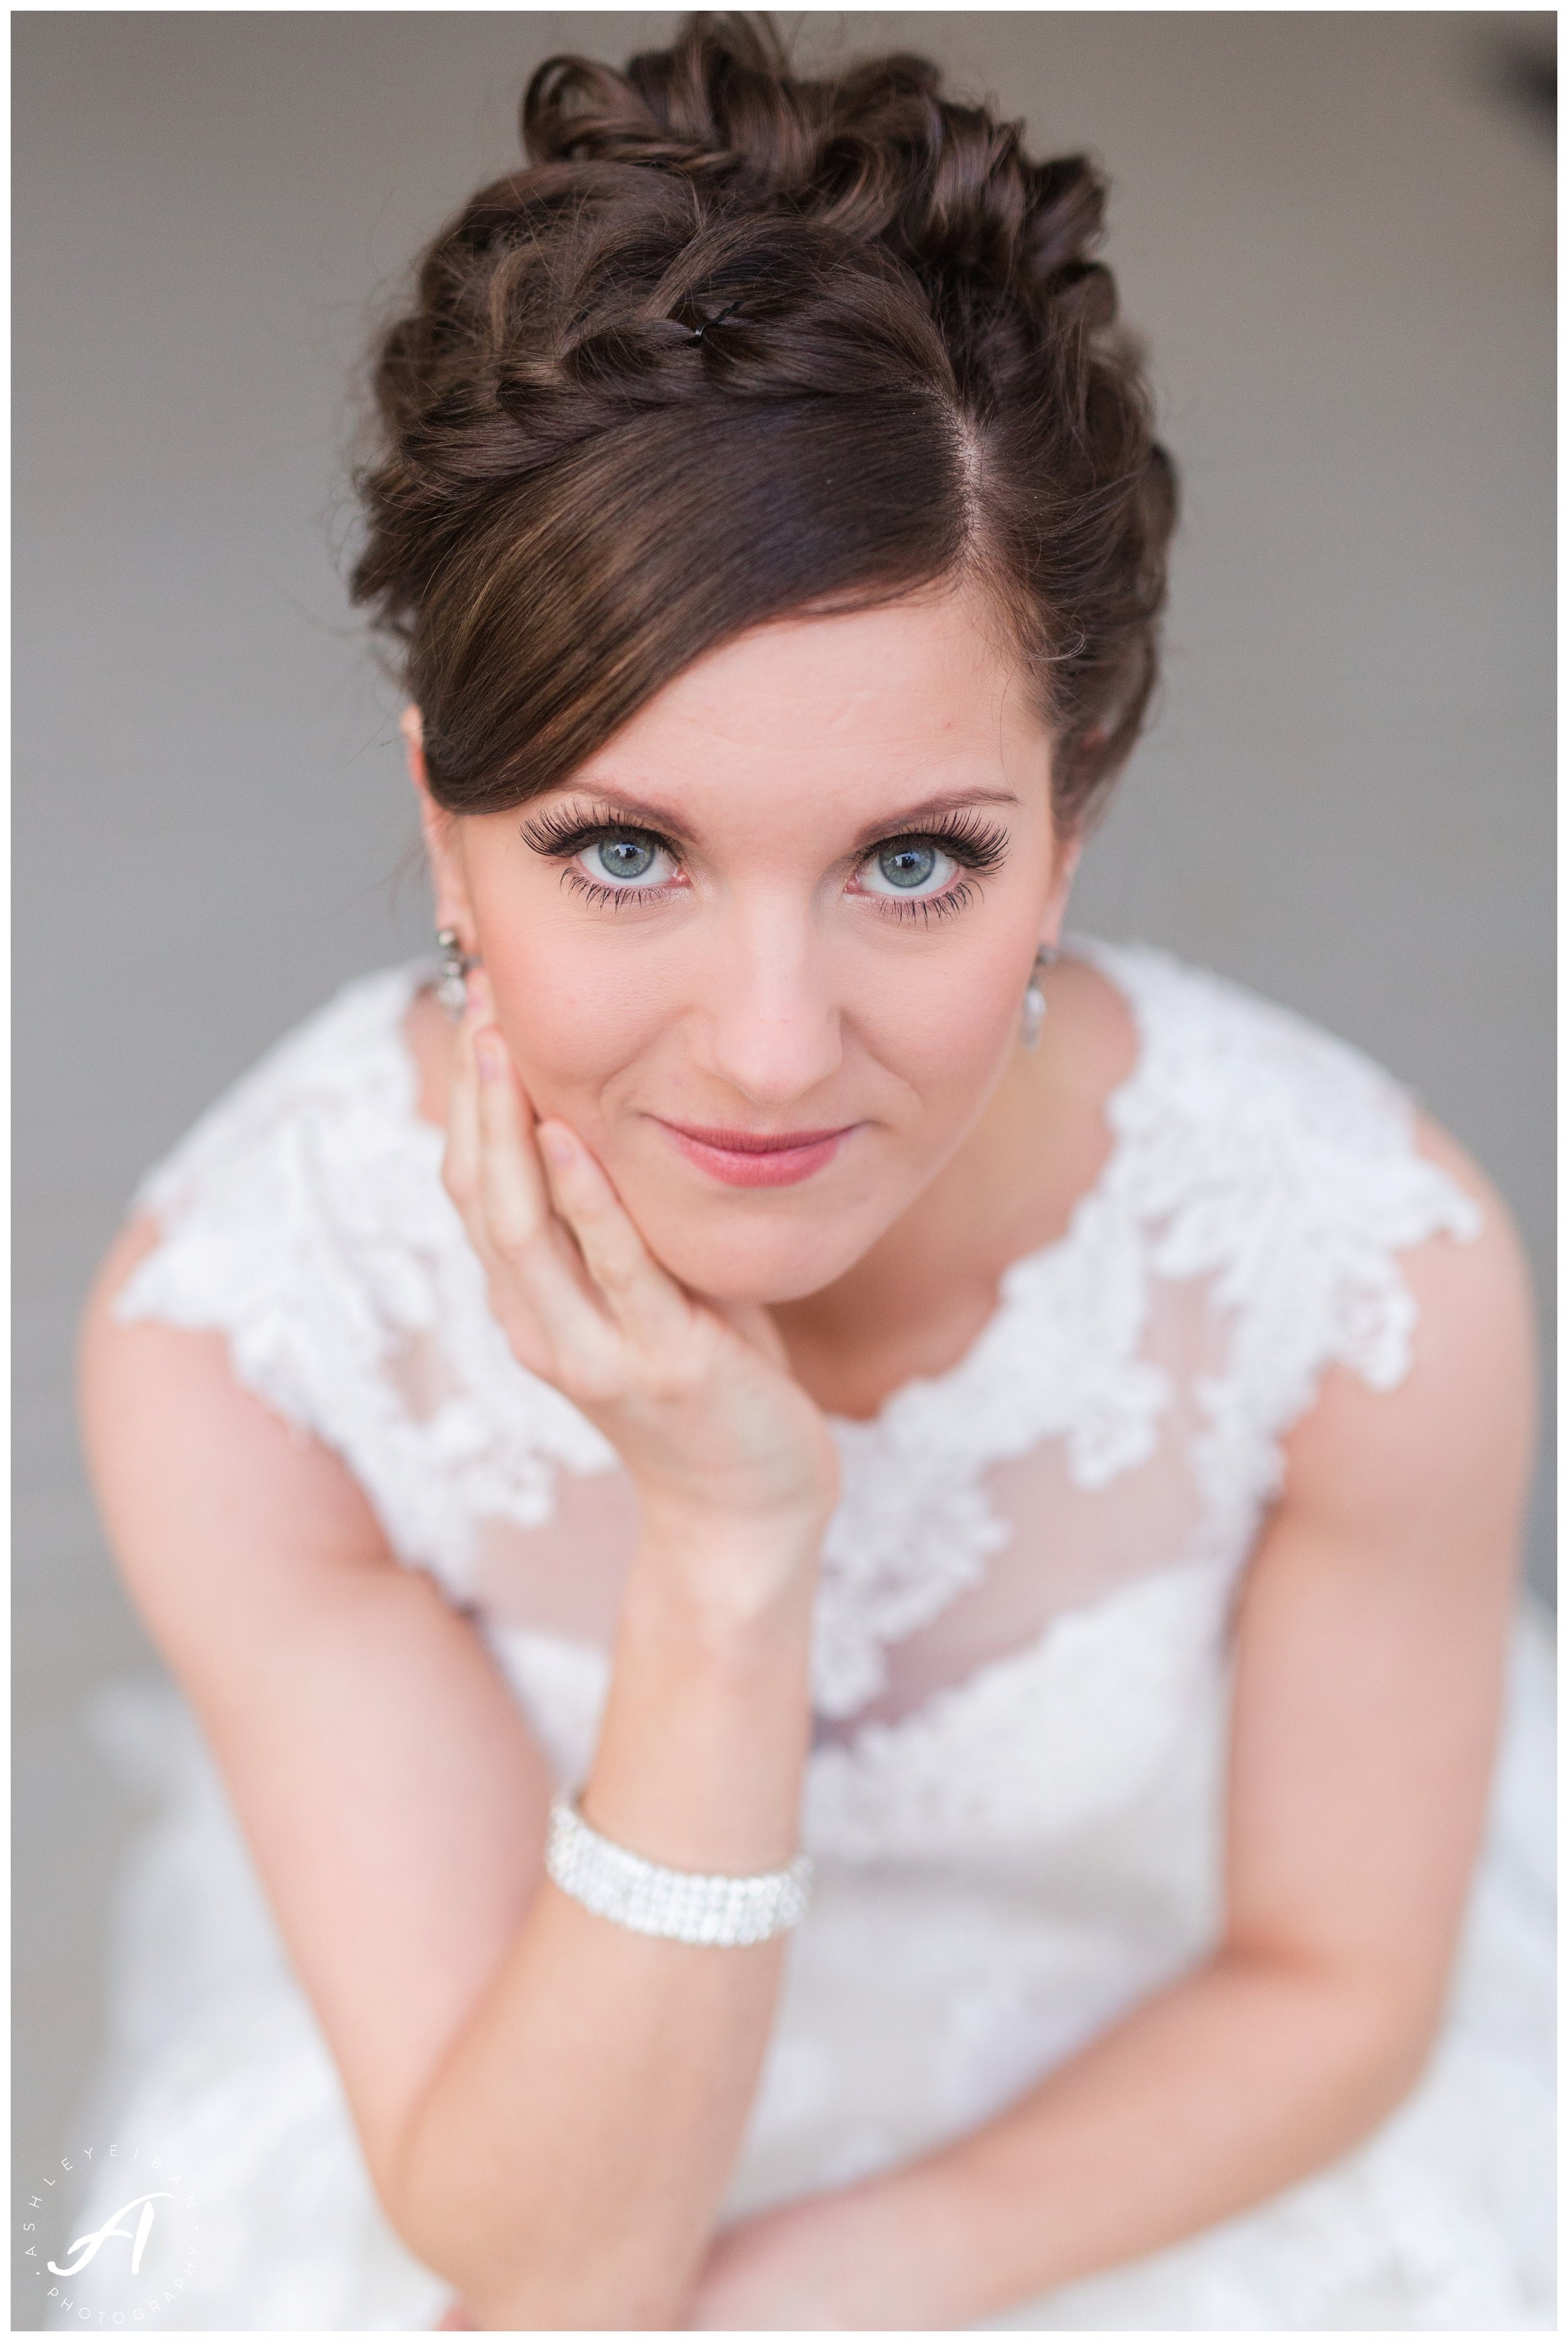 Charlottesville and Lynchburg Wedding and Portrait Photographer || Lynchburg Bridal Portraits || Ashley Eiban Photography || www.ashleyeiban.com